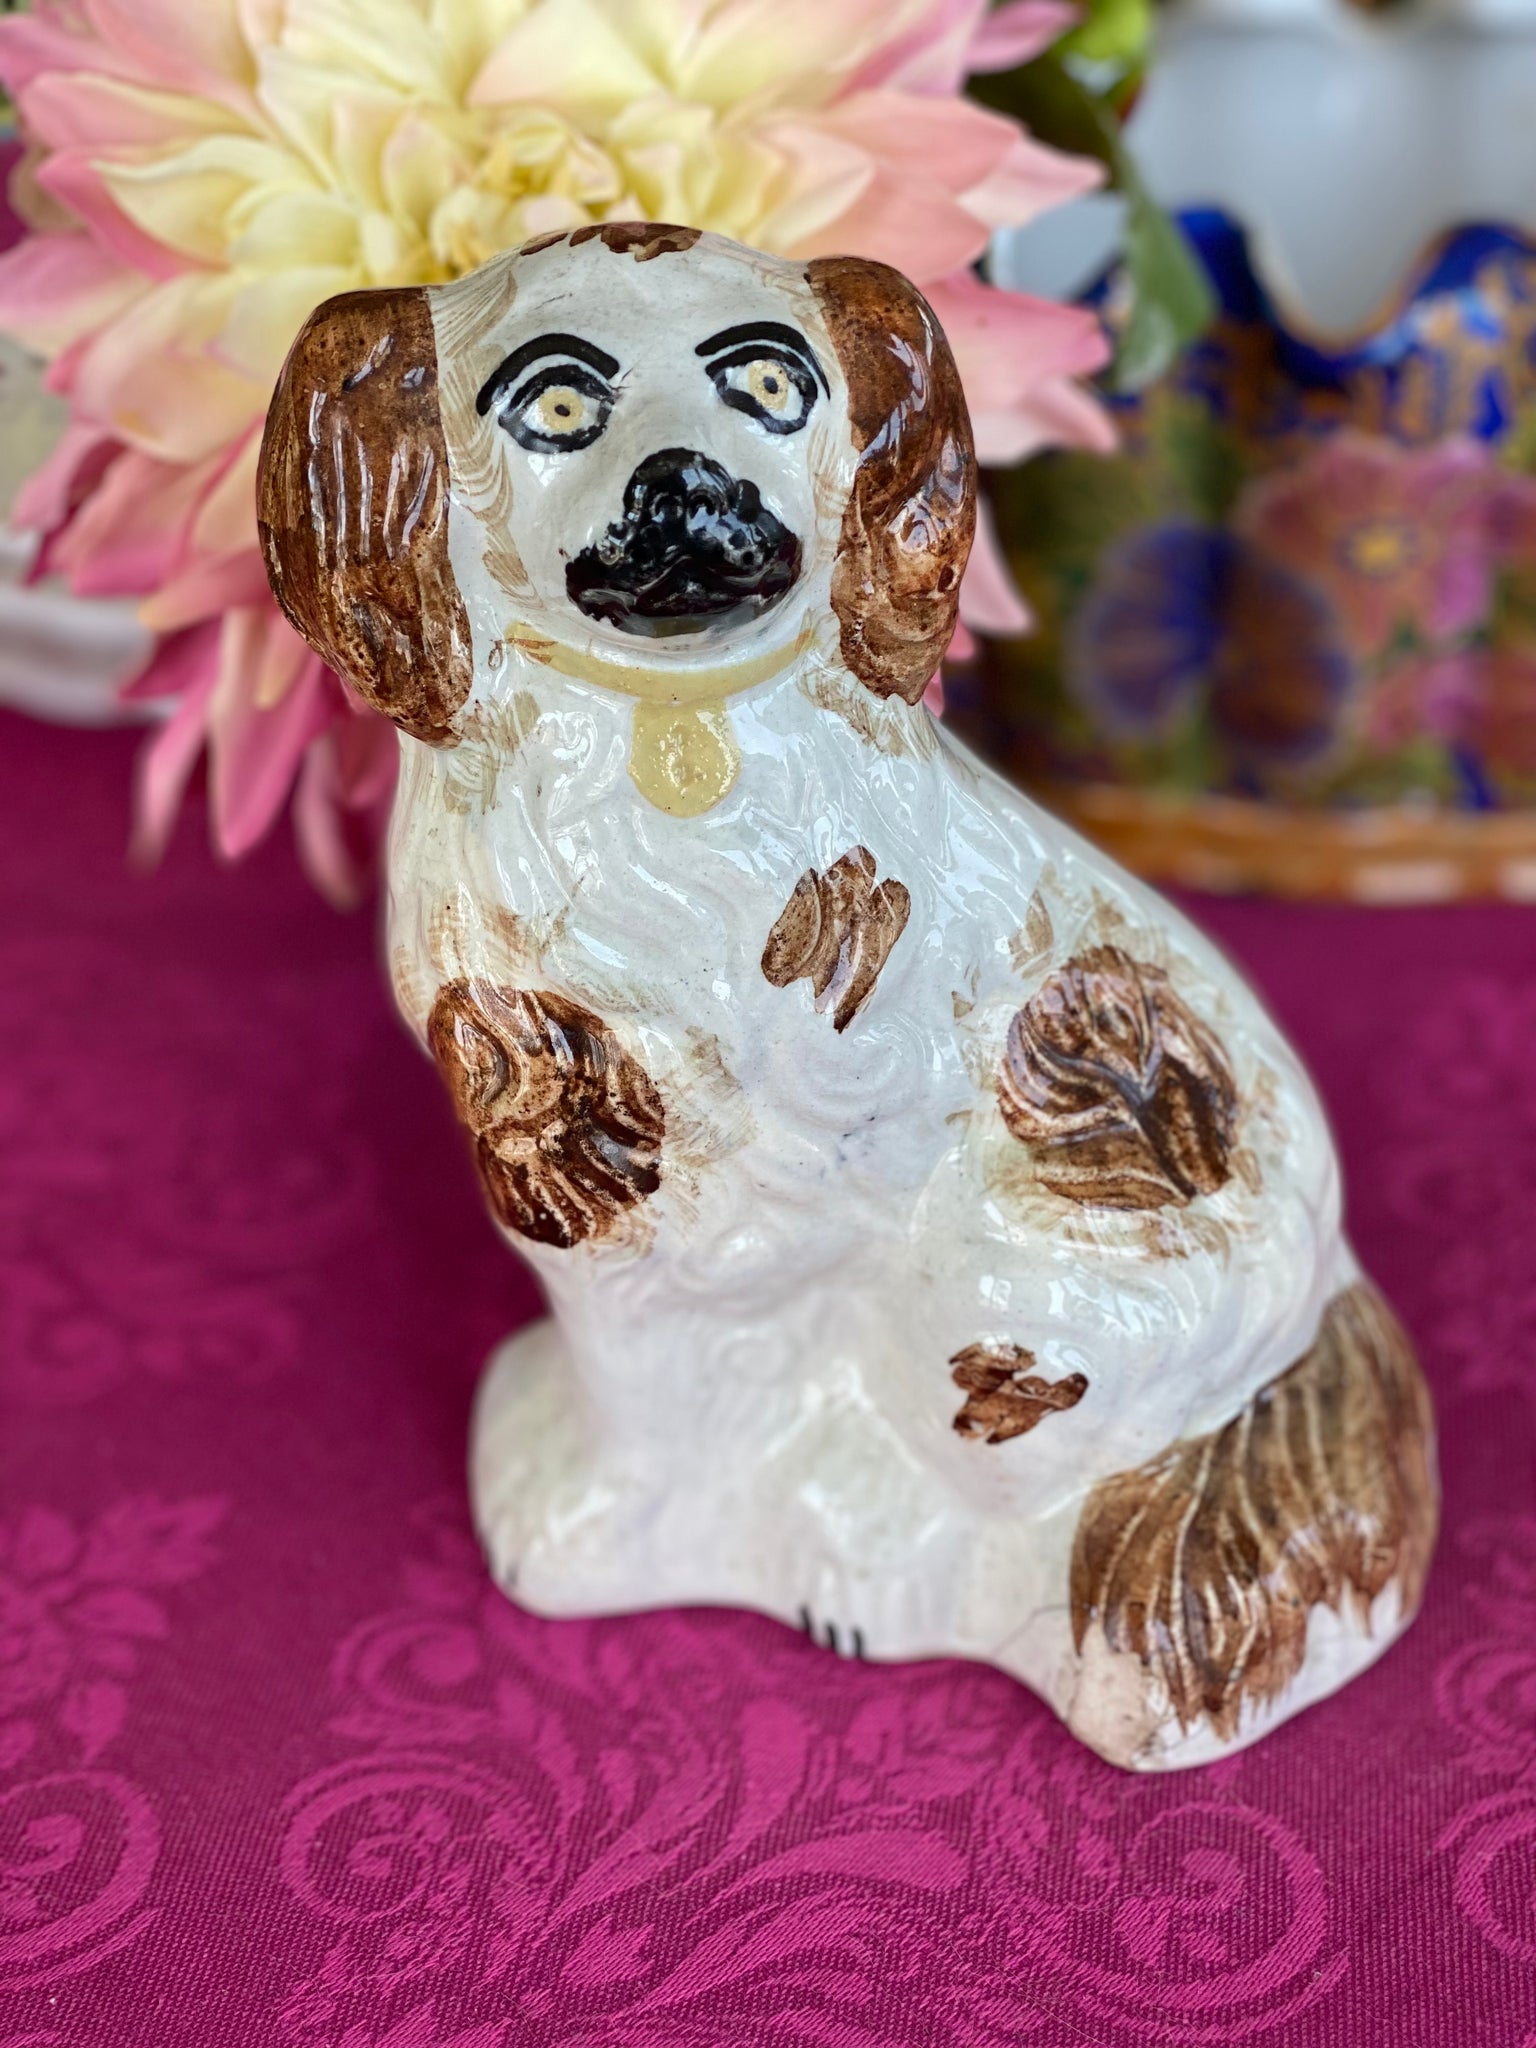 19th Century brown and cream Staffy dog